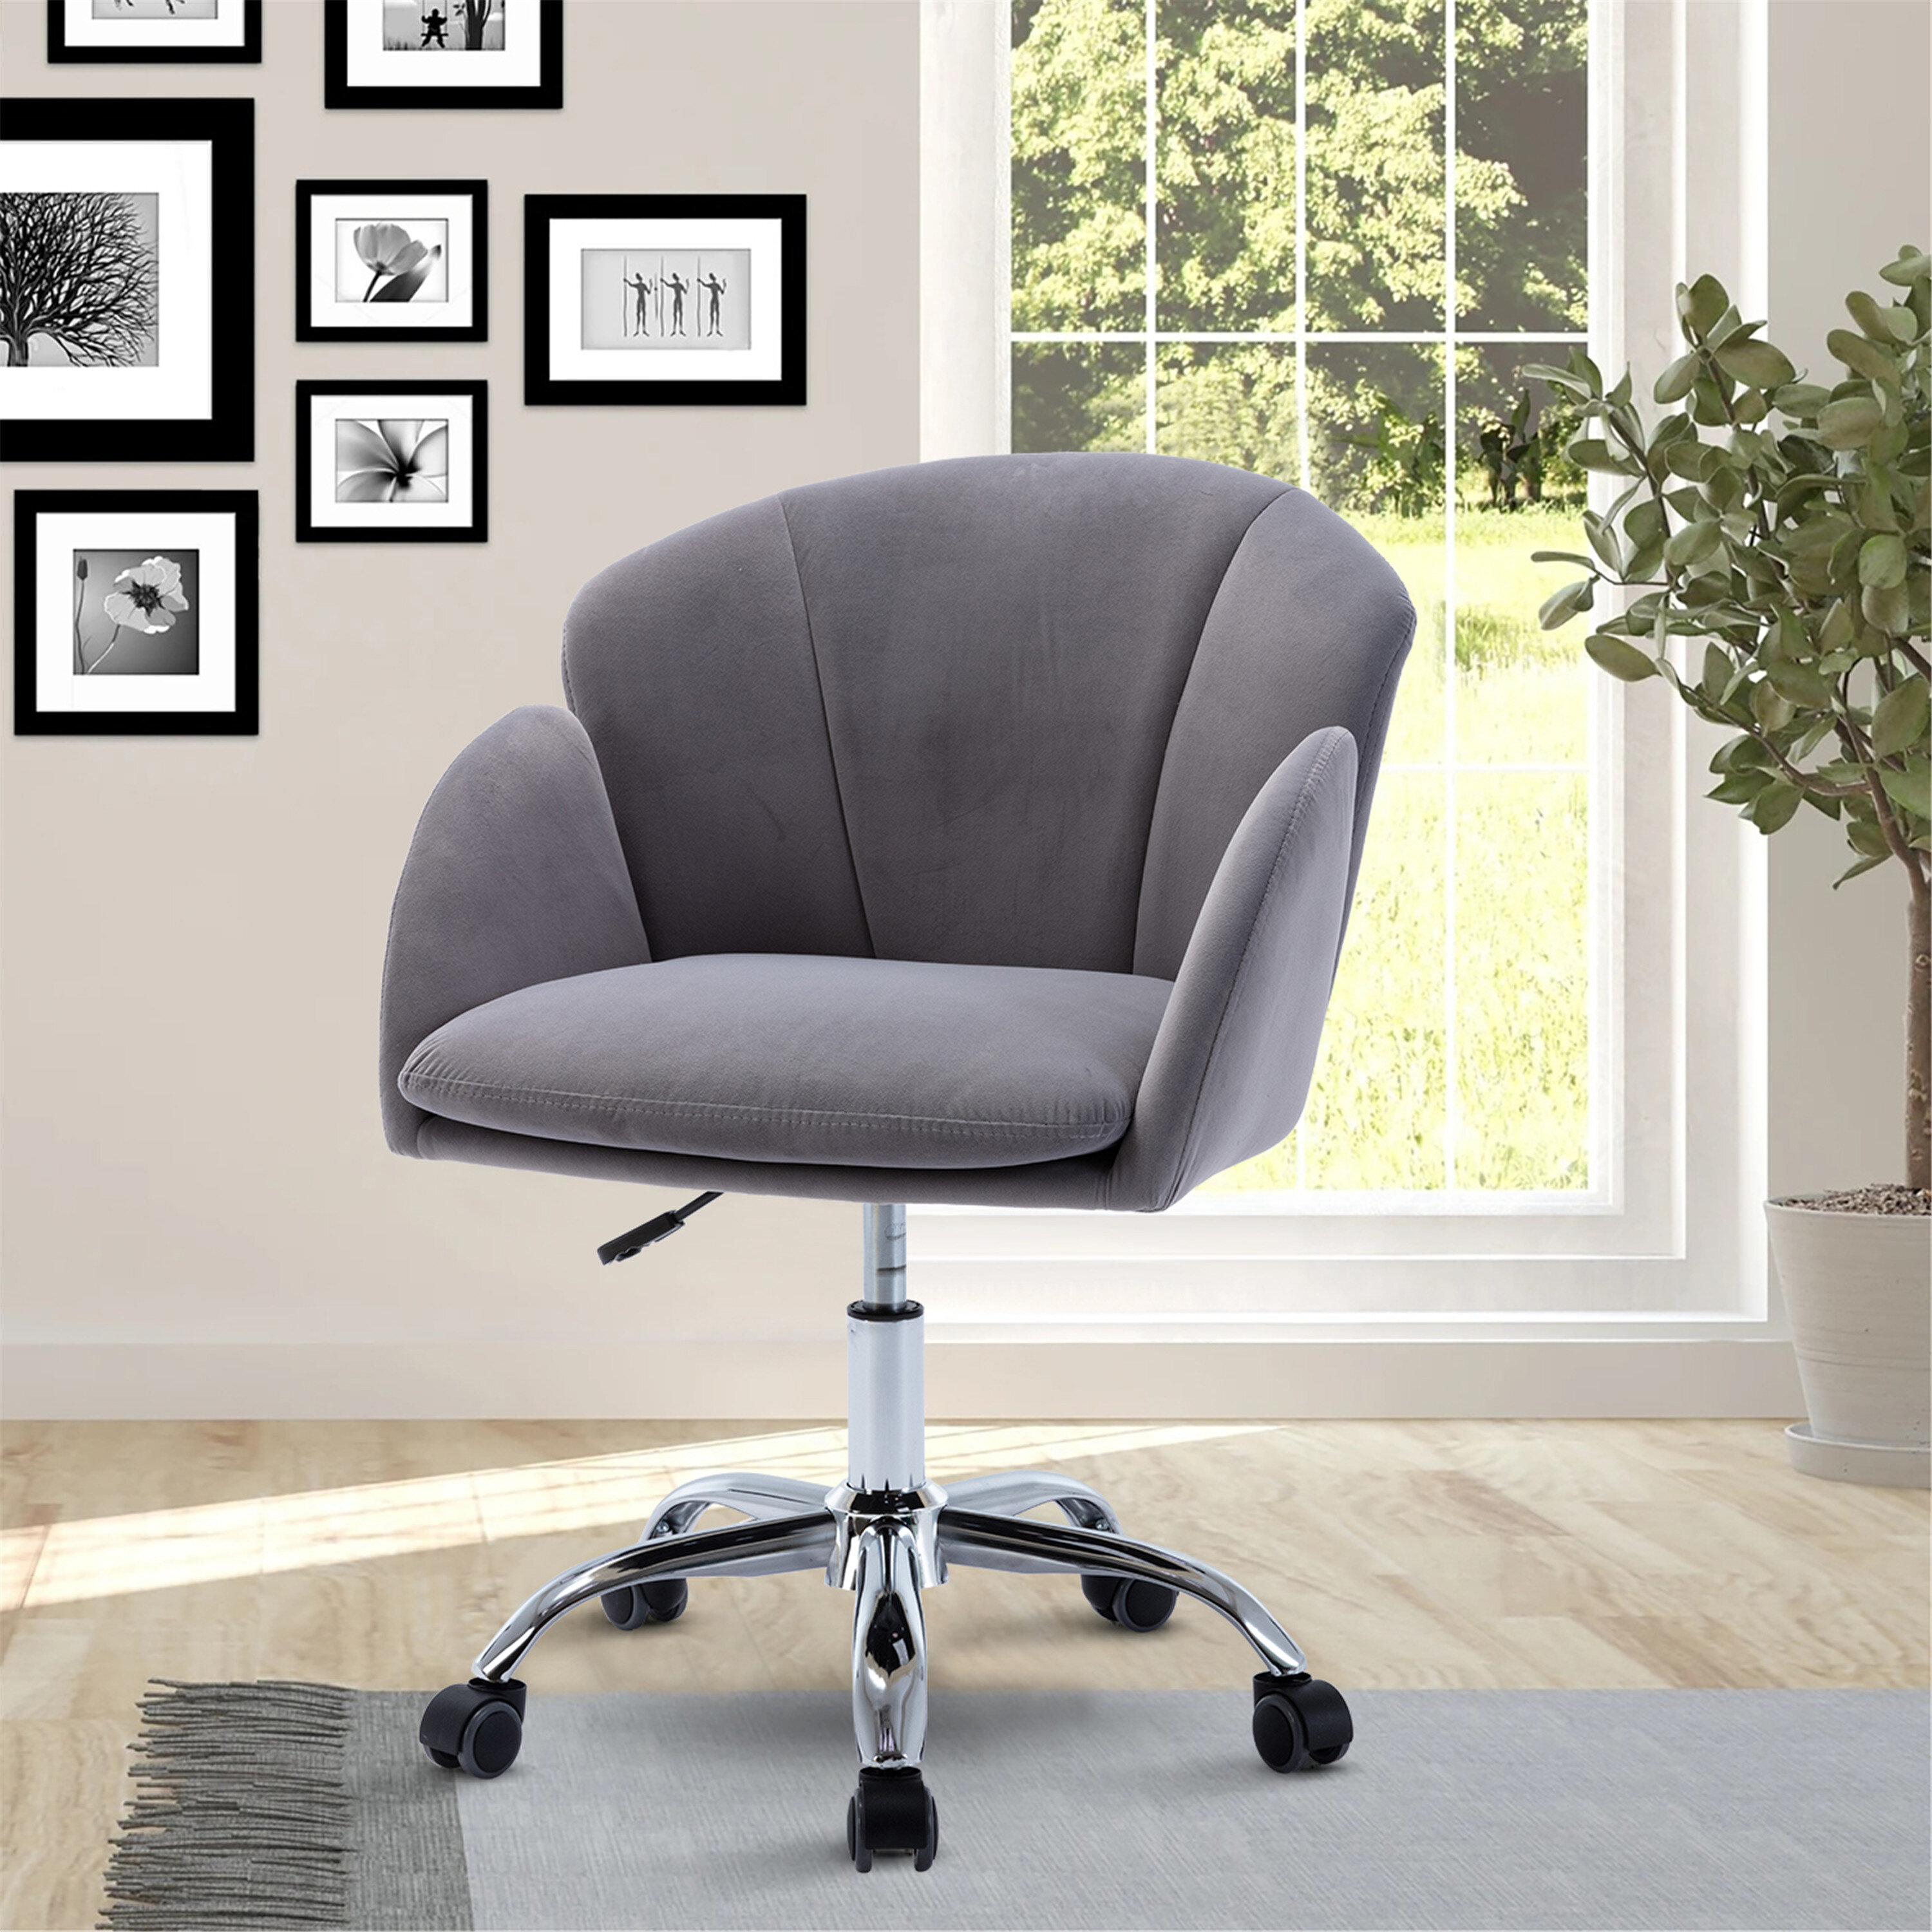 Serta Valetta Dovetail Gray Home Office Chair